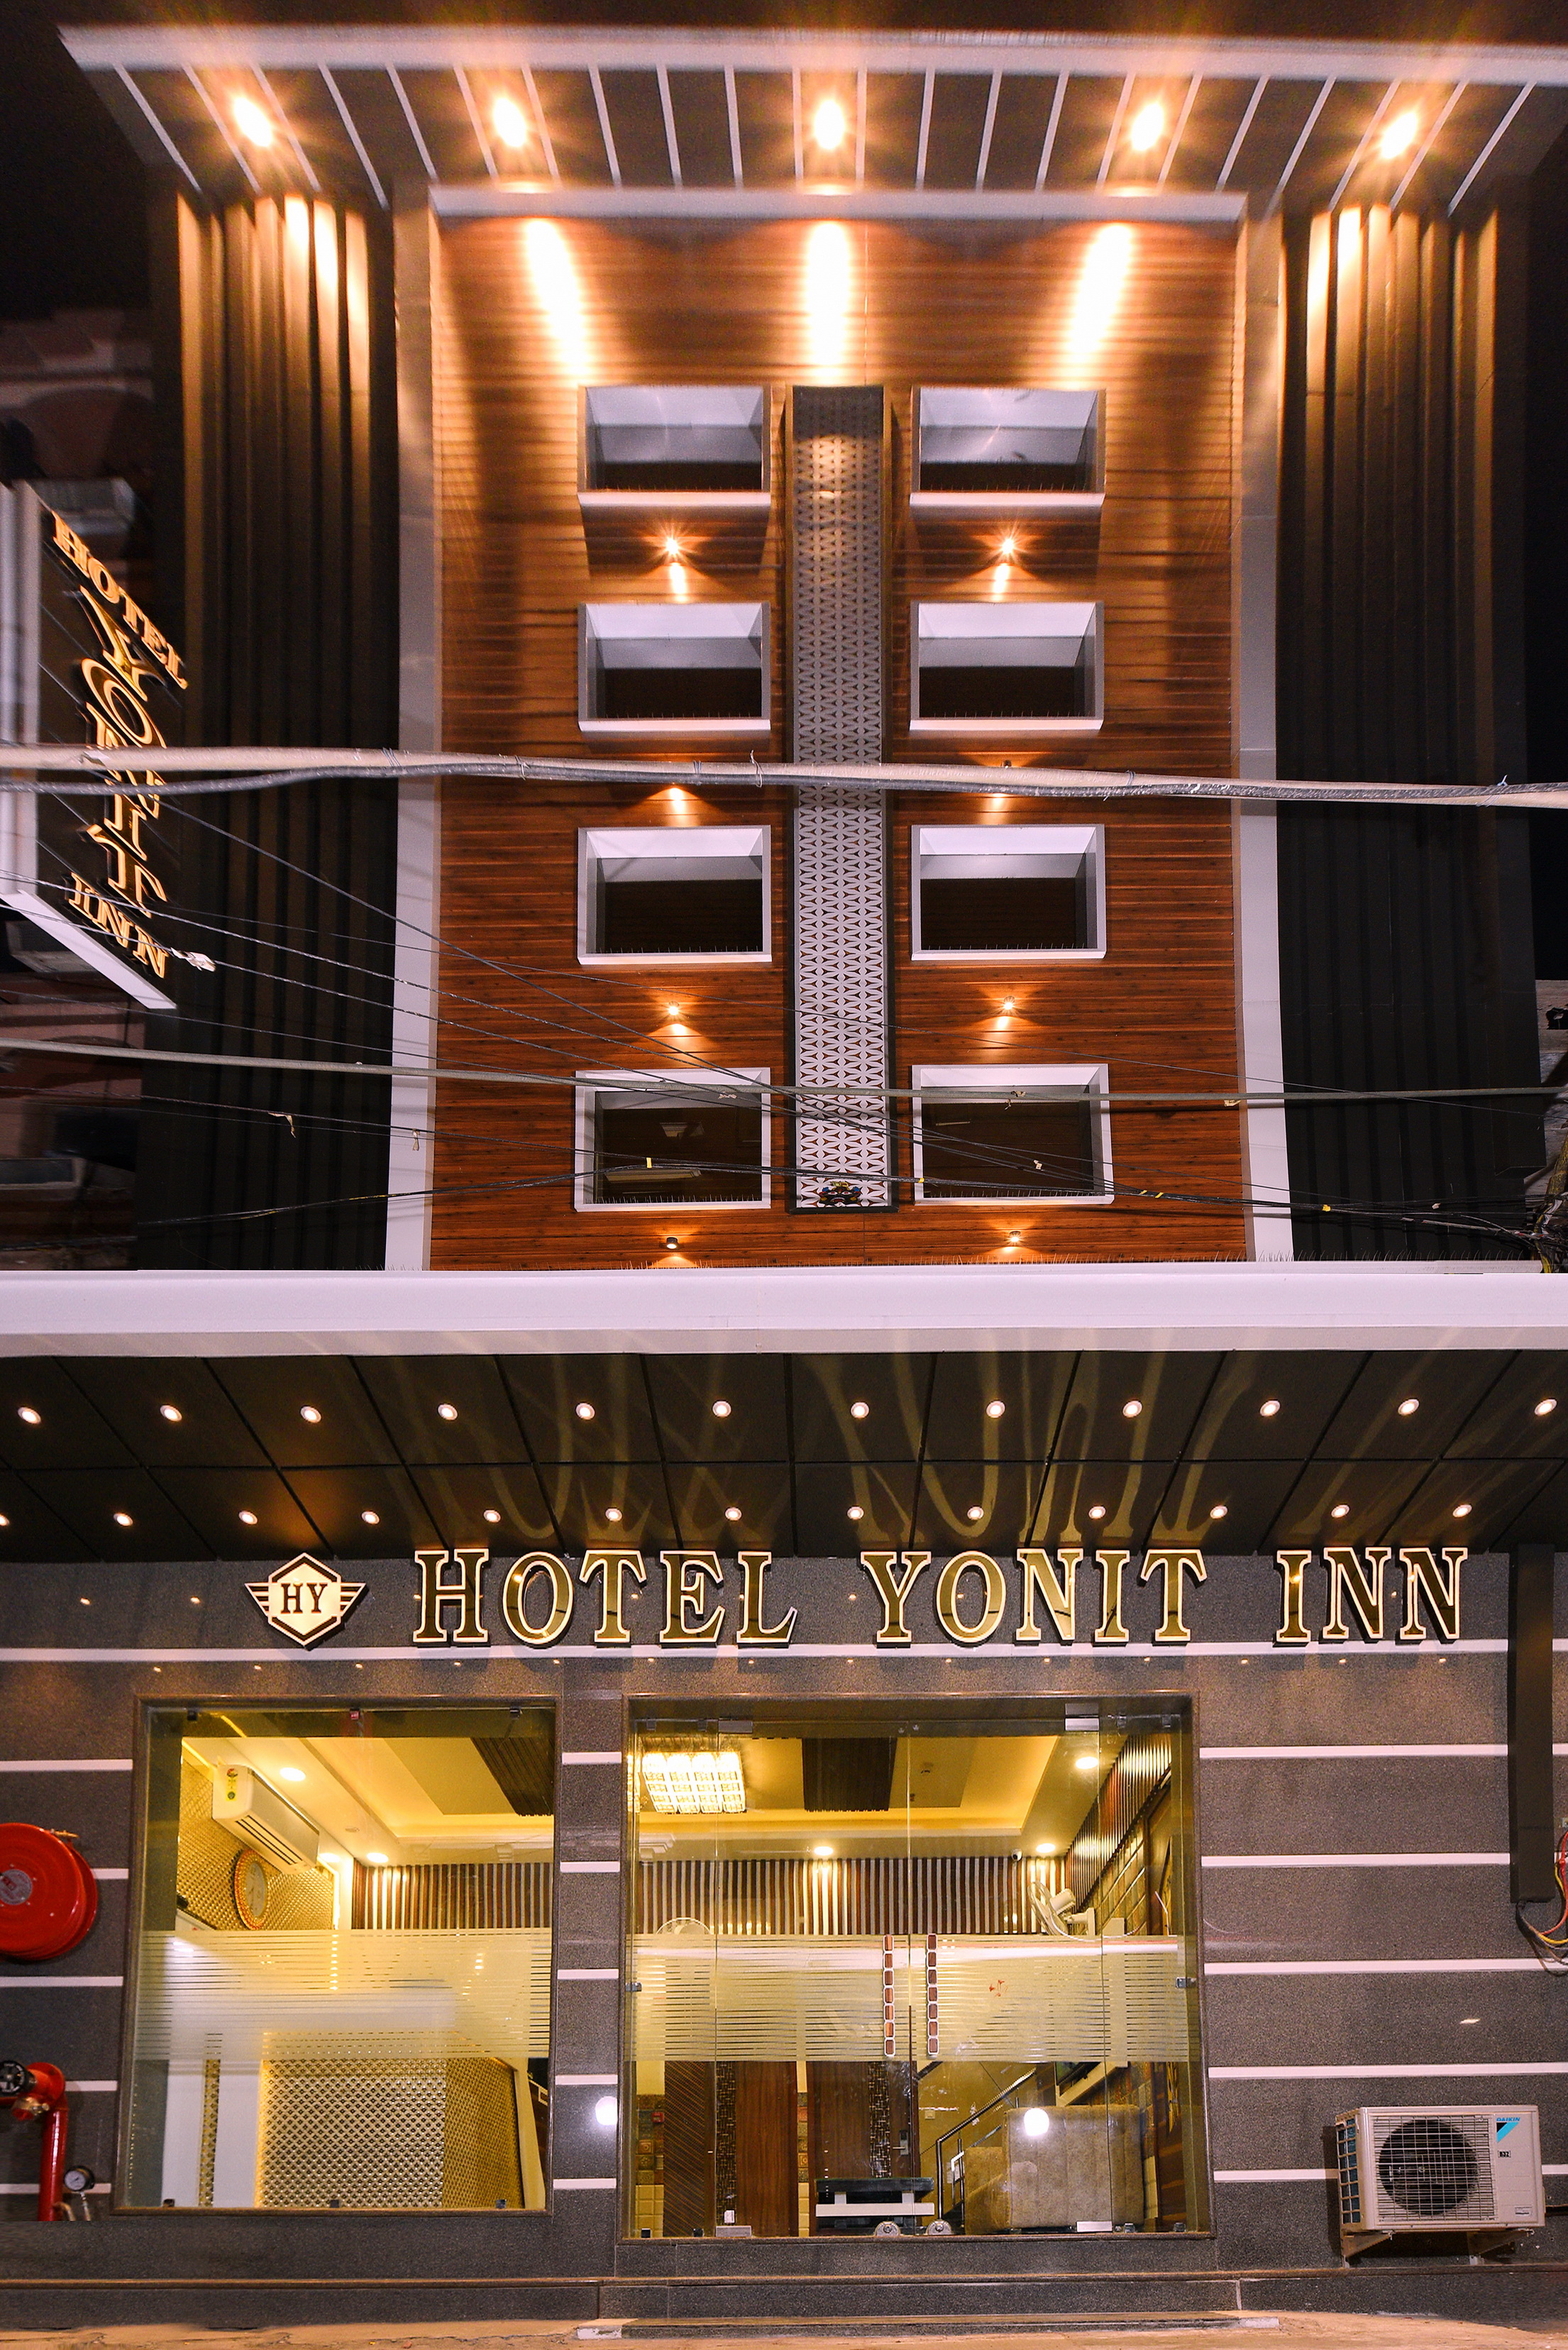 Hotel Yonit Inn